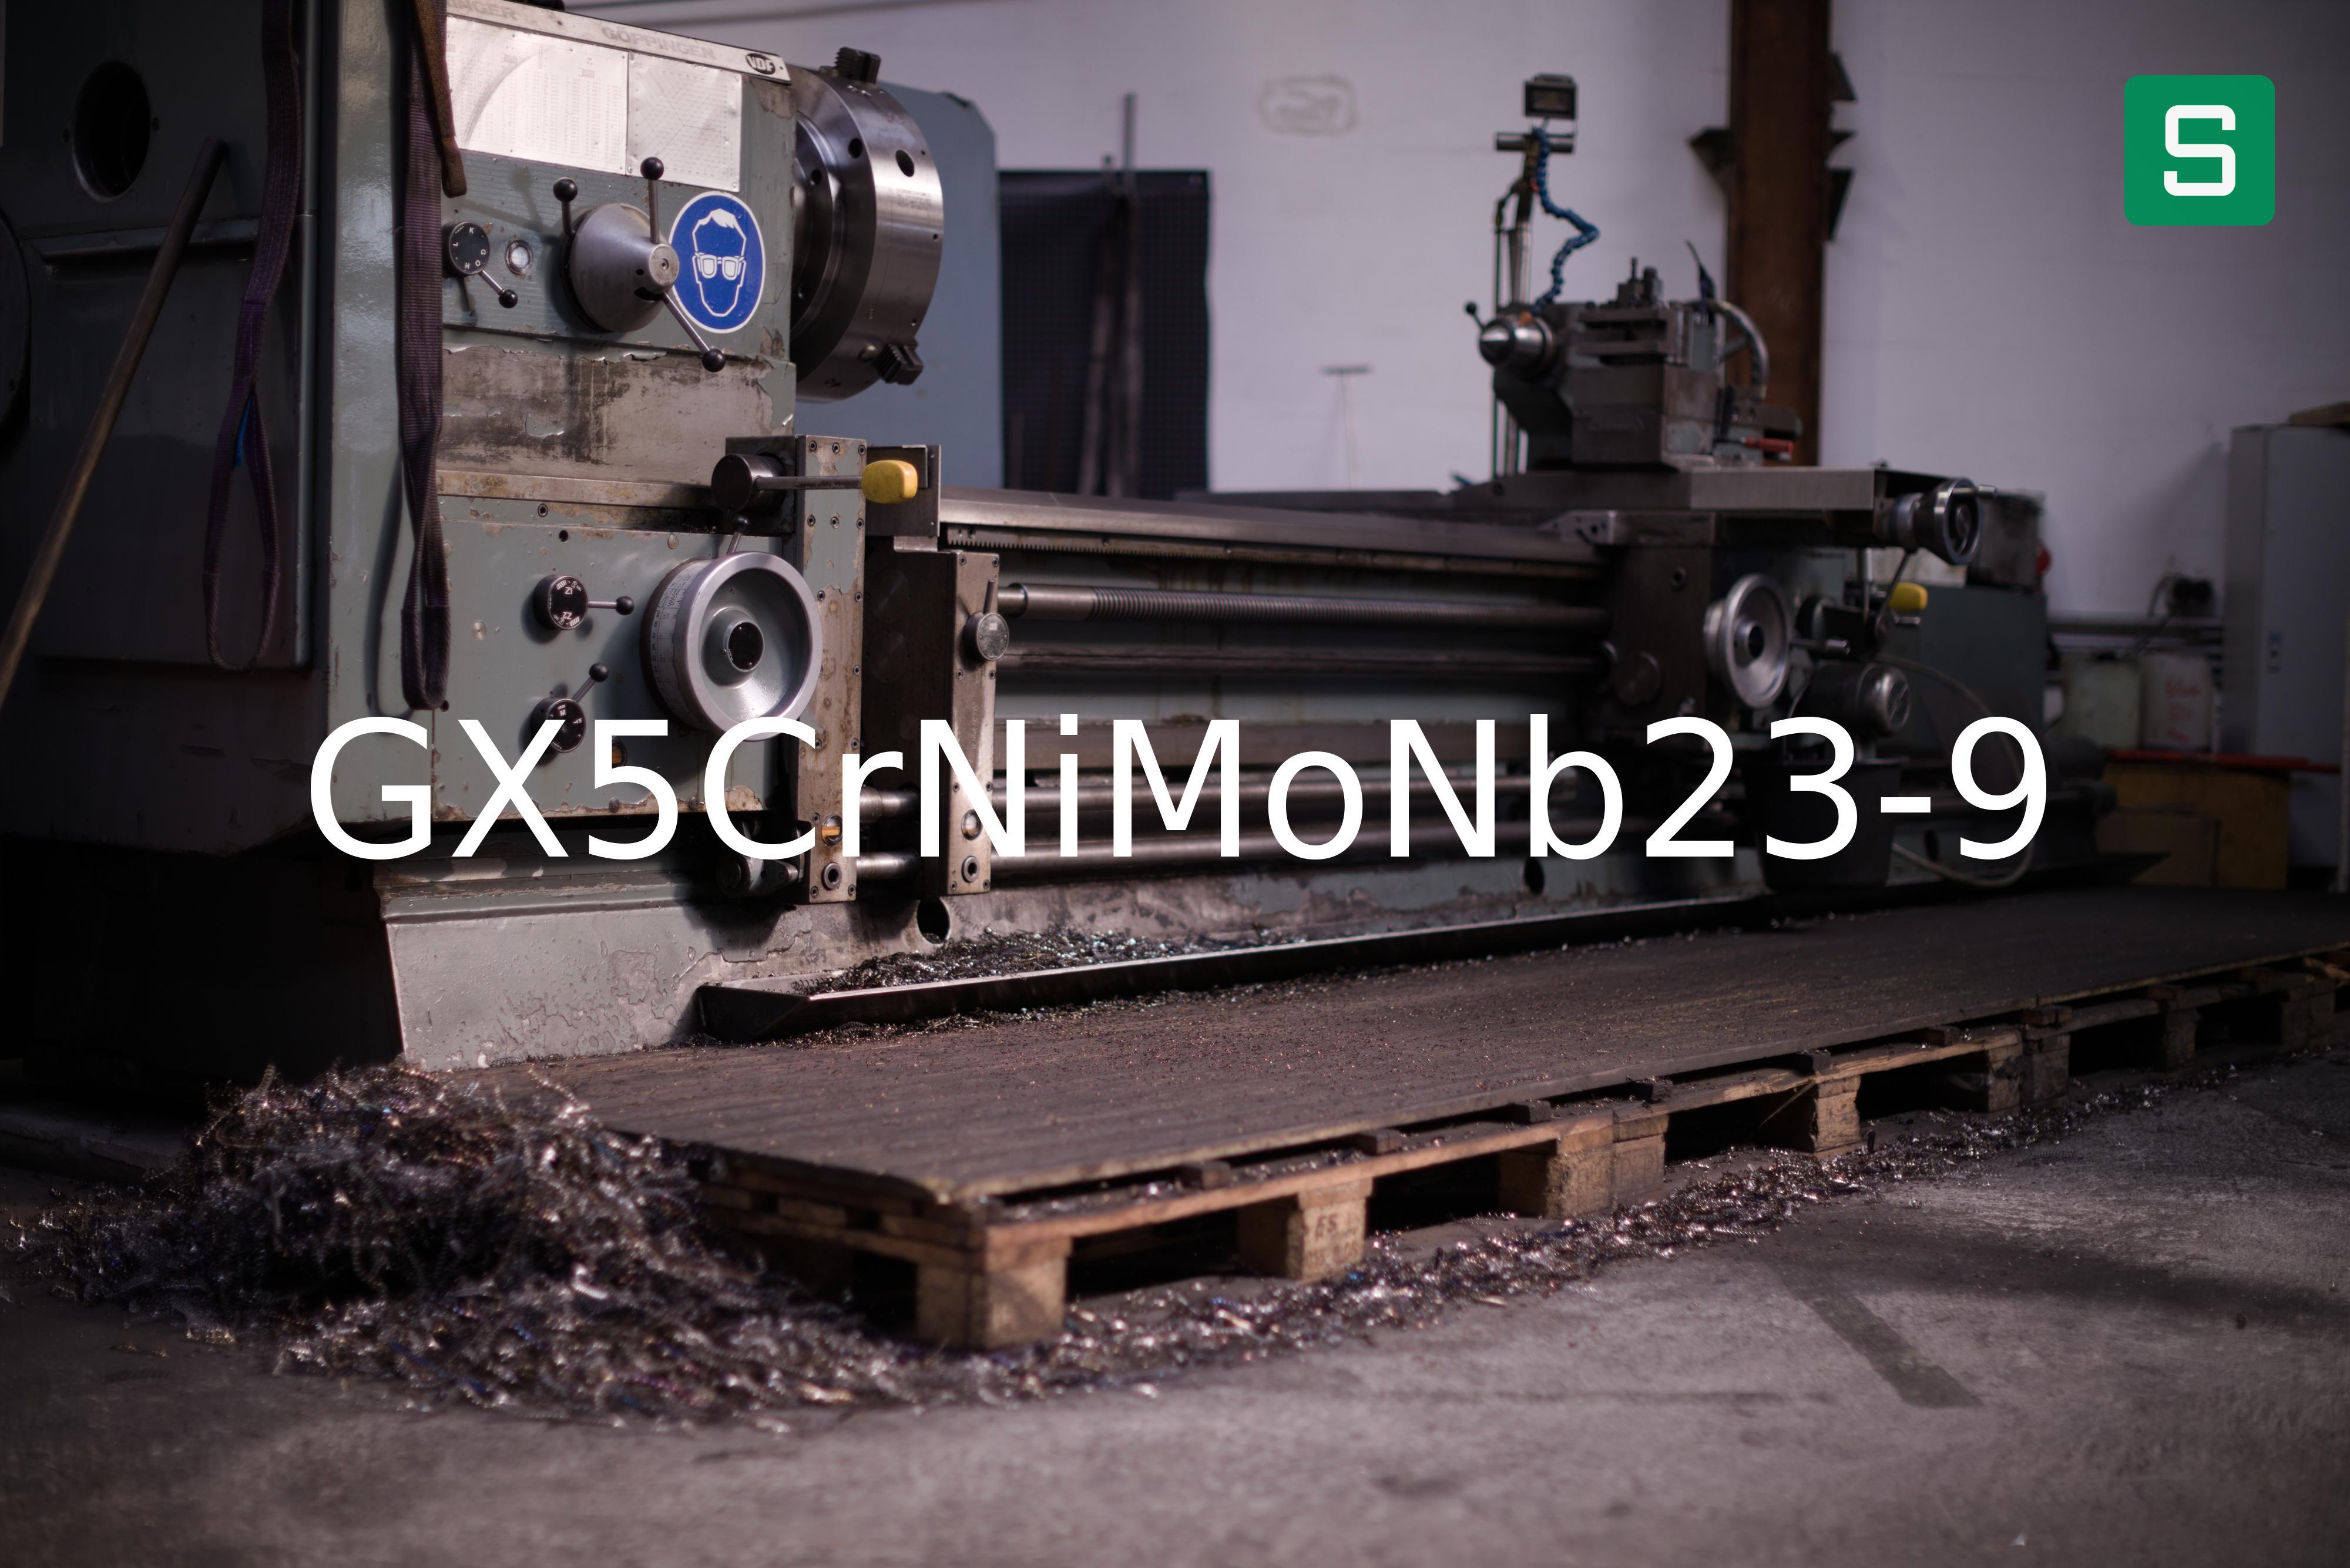 Steel Material: GX5CrNiMoNb23-9